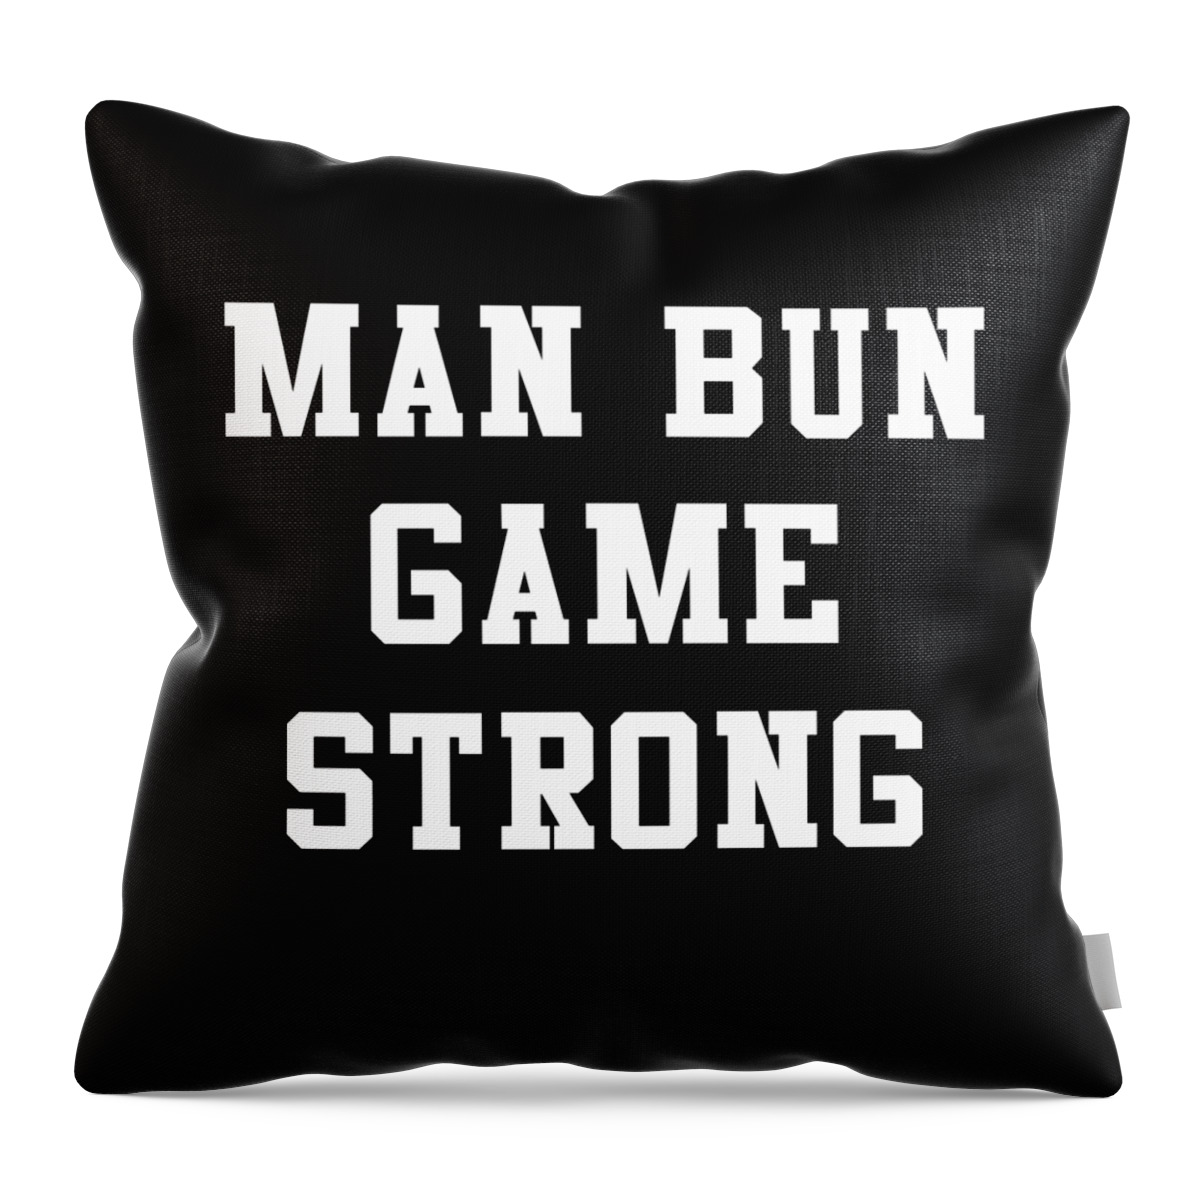 Funny Throw Pillow featuring the digital art Man Bun Game Strong by Flippin Sweet Gear